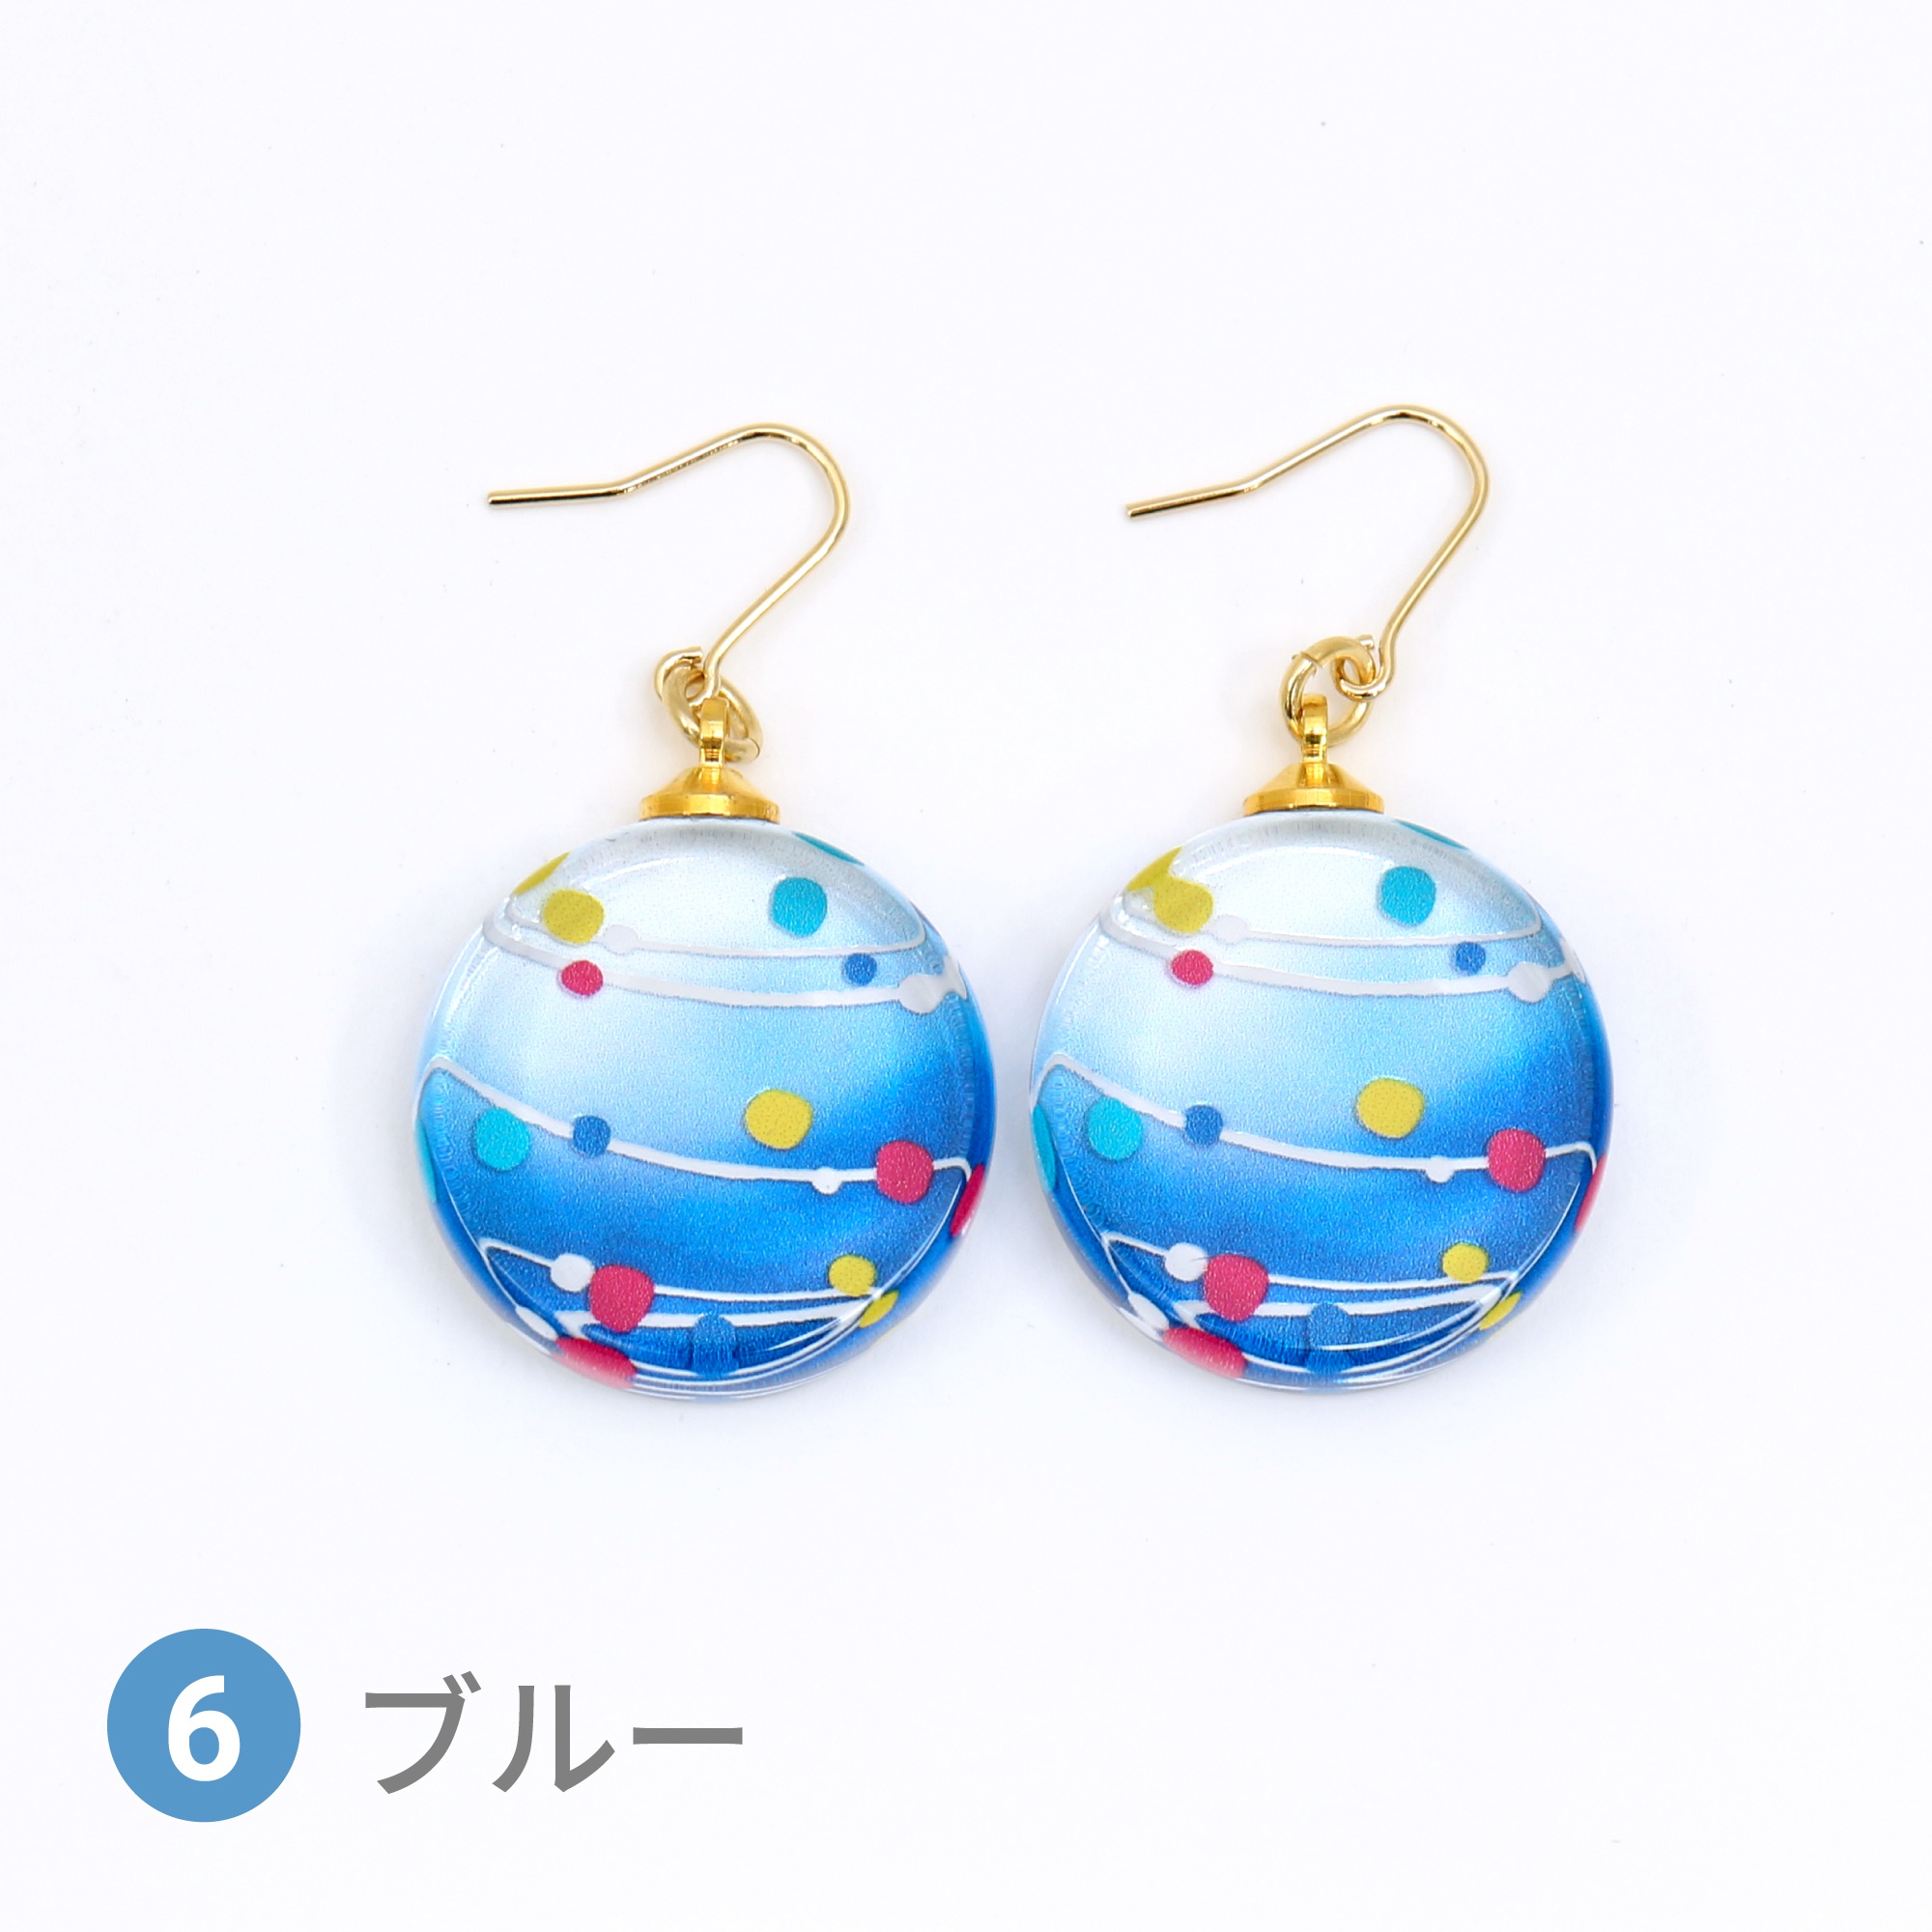 Glass accessories Pierced Earring WATER BALLOON blue round shape